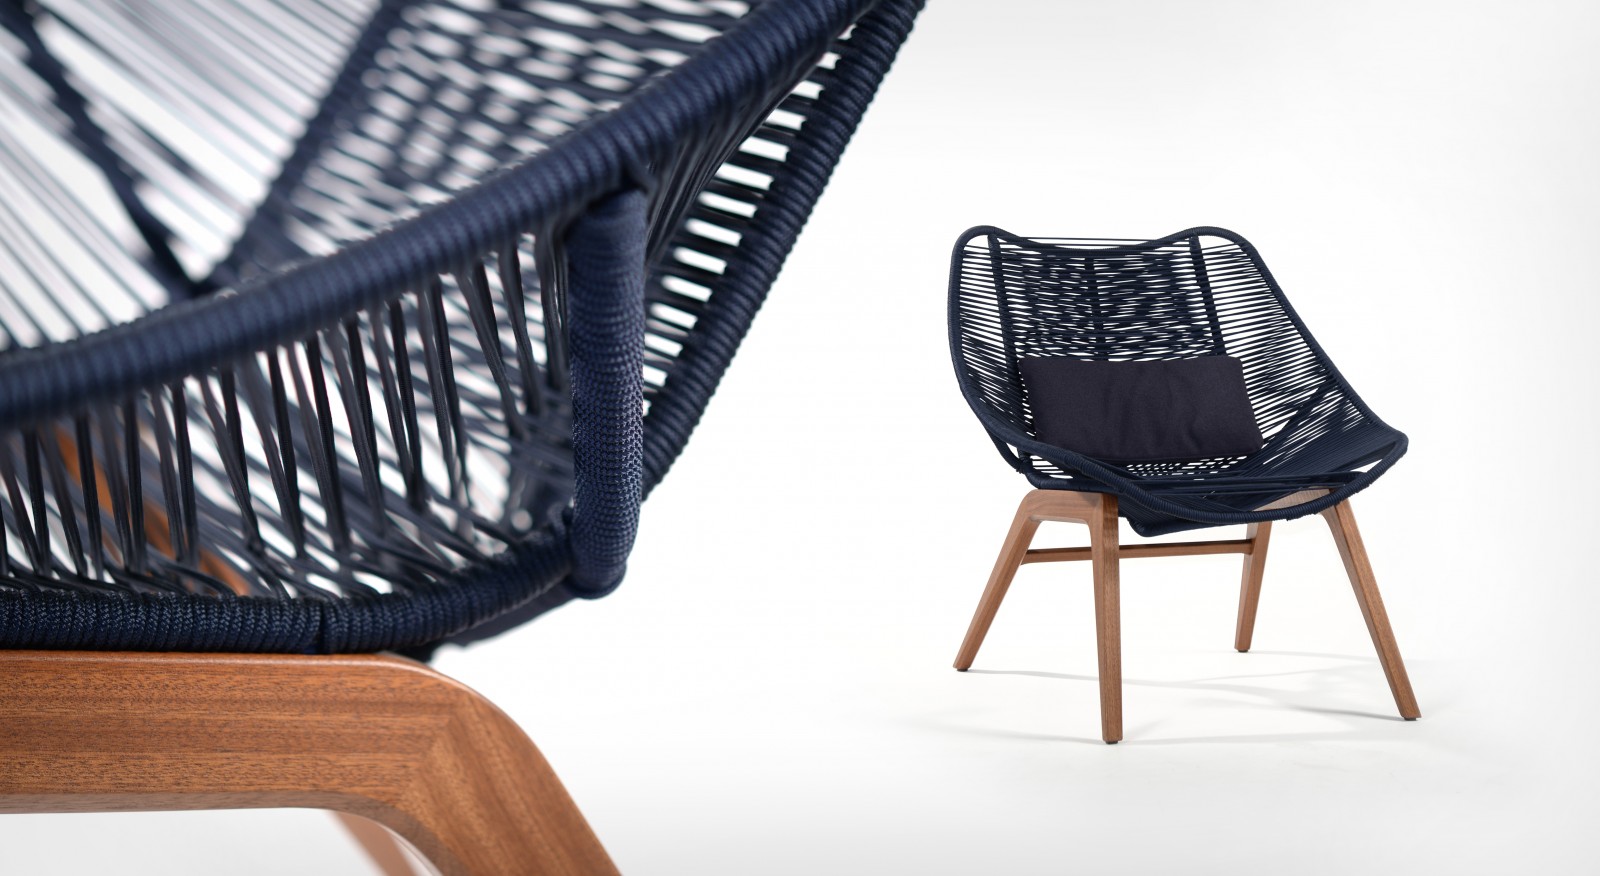 Wishbone chair is inspired by nautical aesthetics